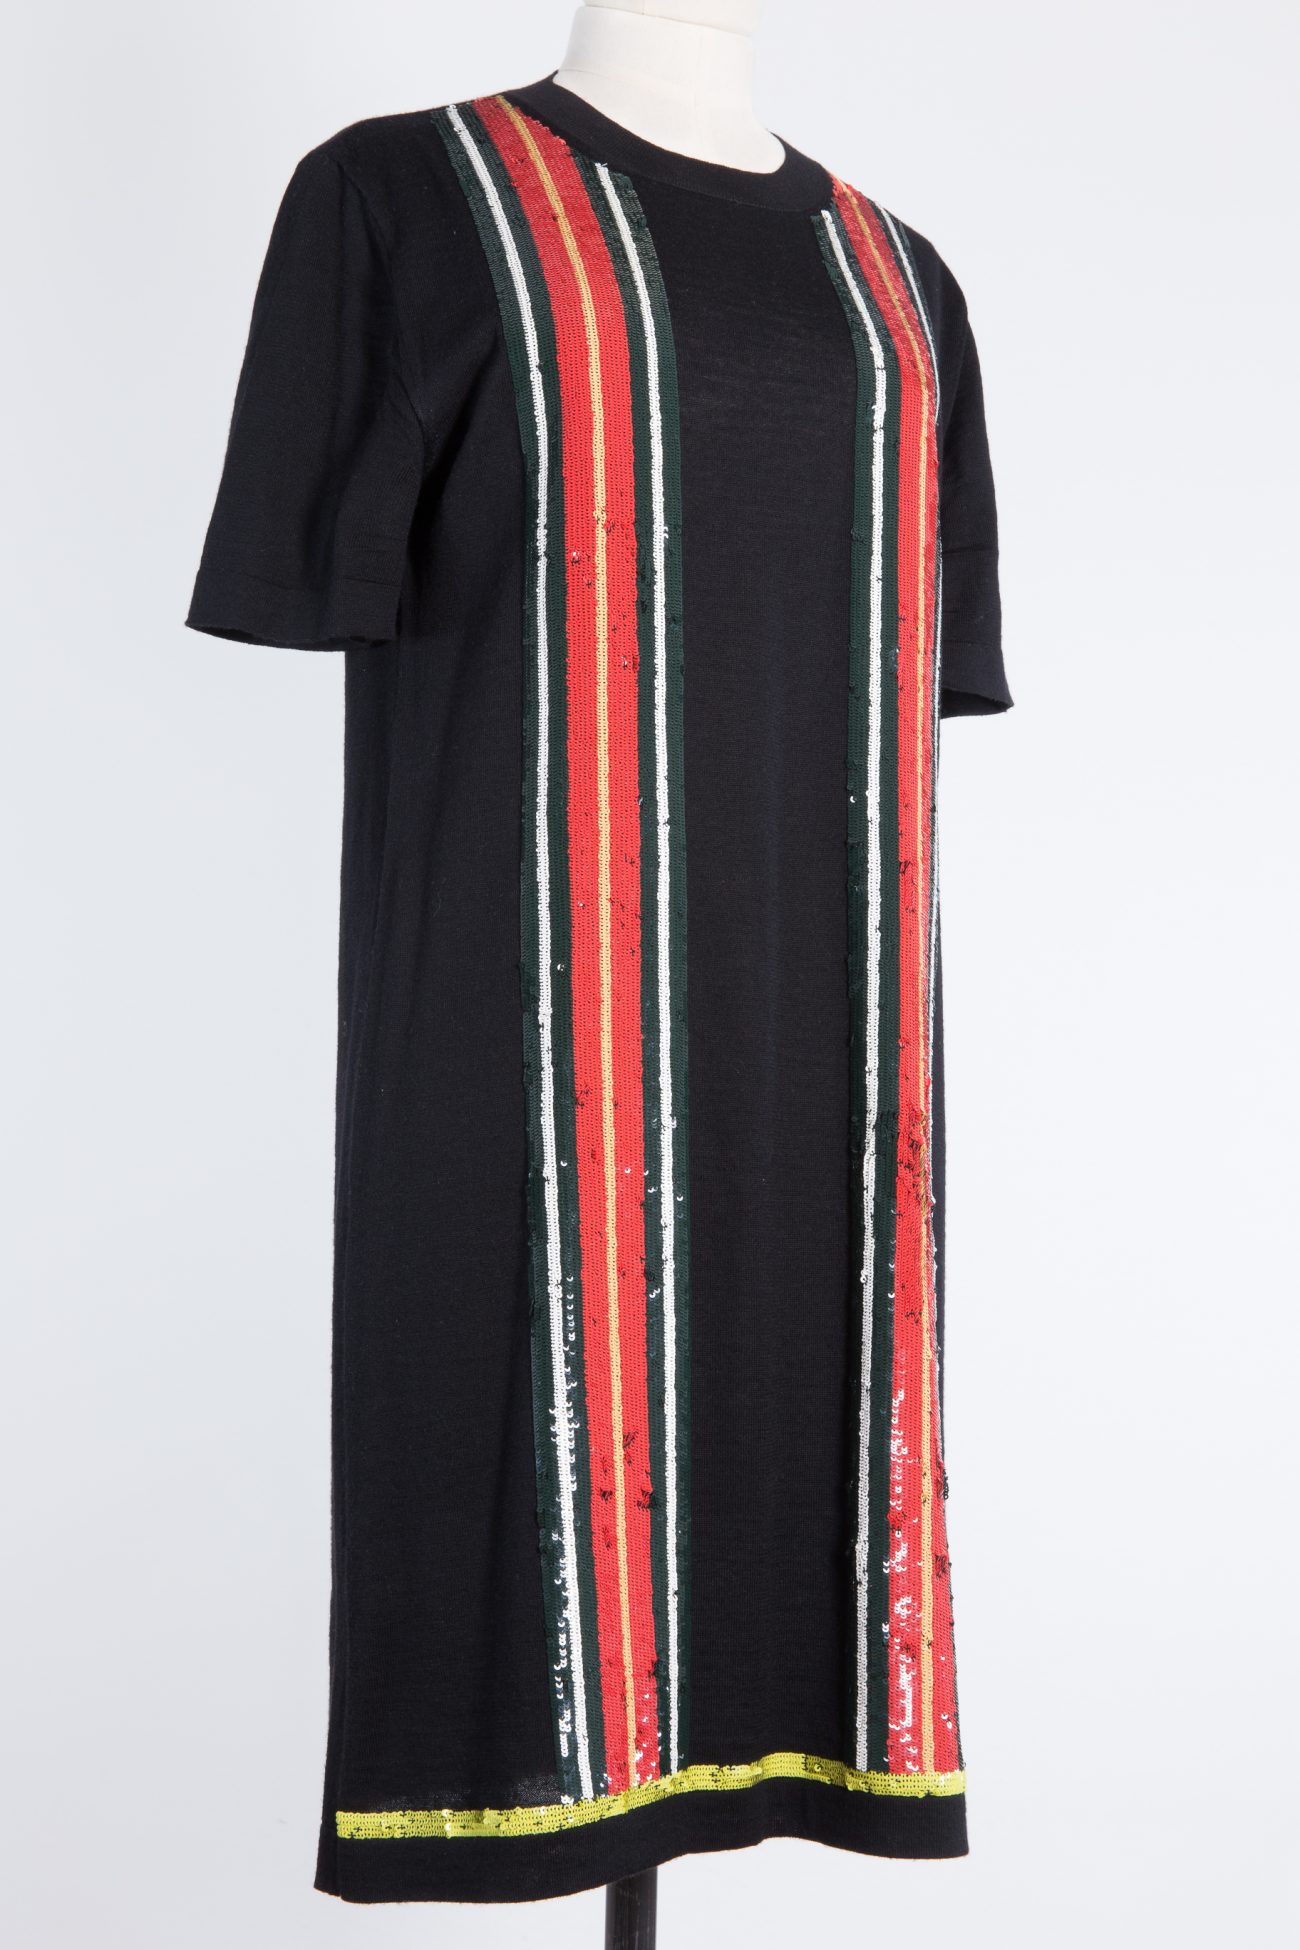 Louis Vuitton Sequin Dress